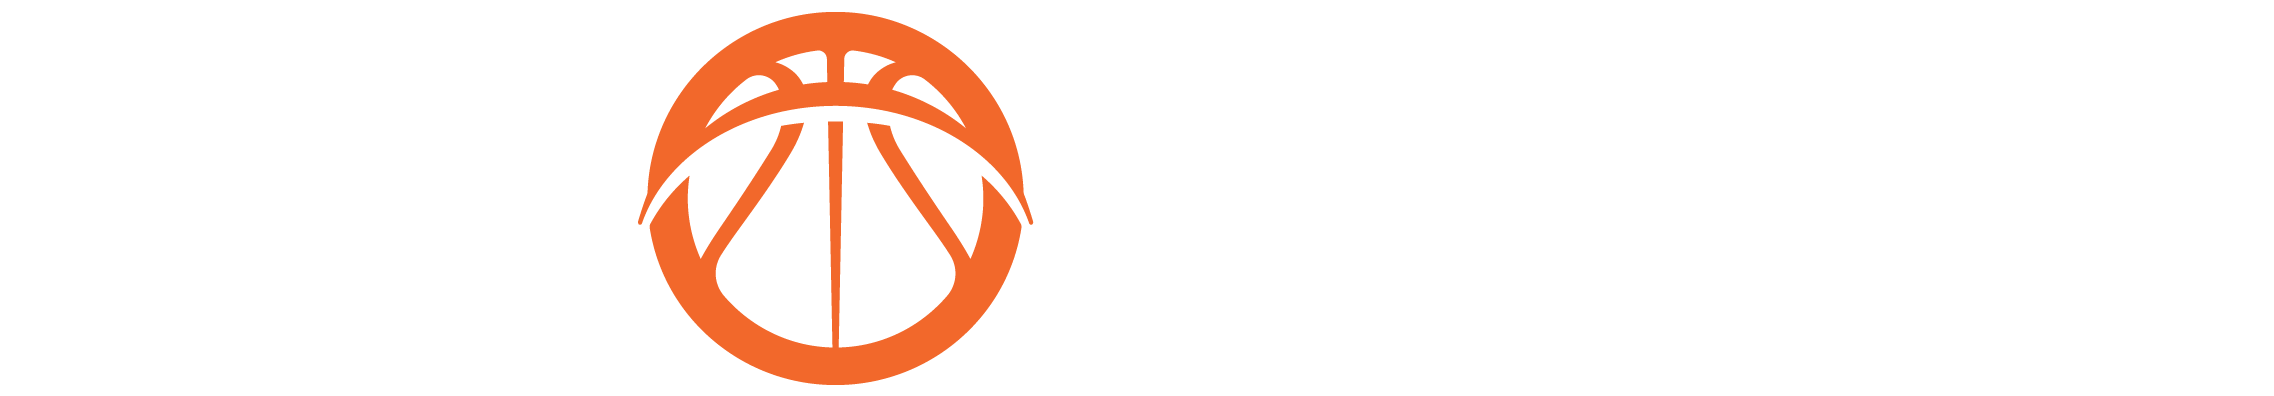 nb-white-logo.svg